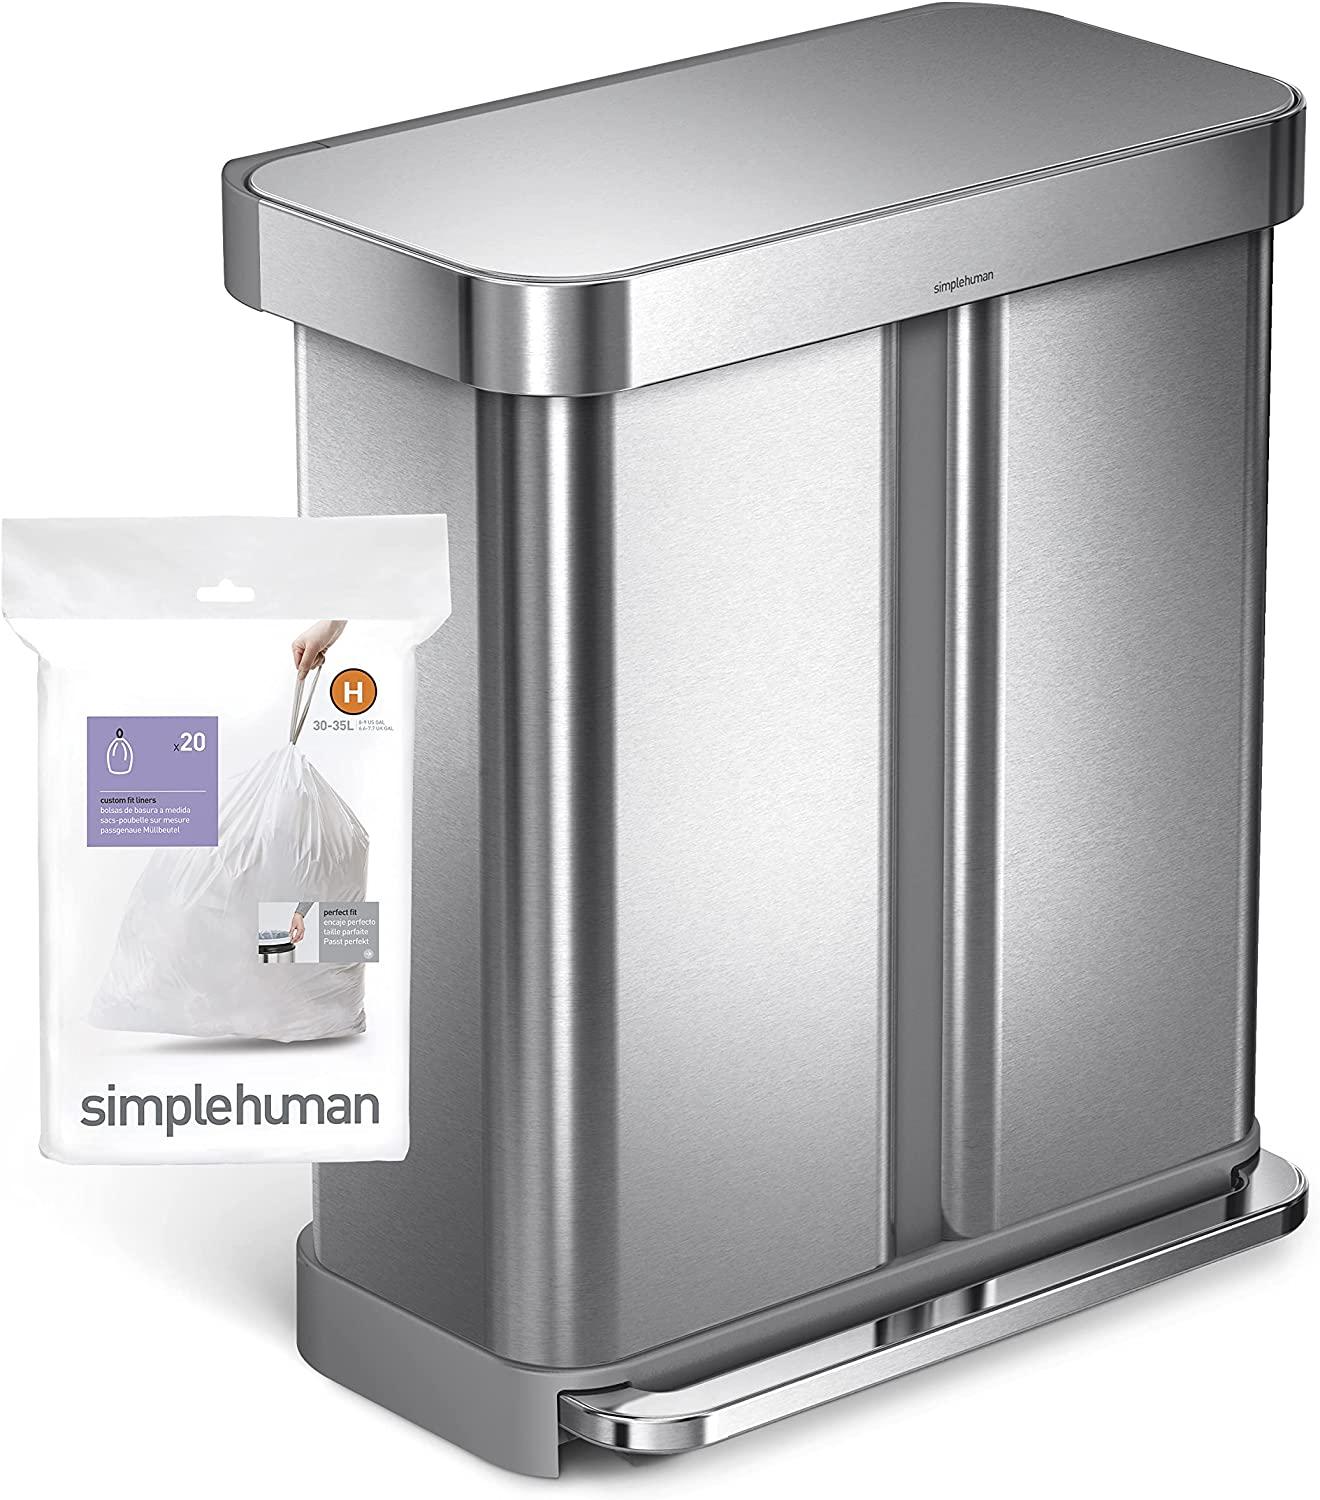 simplehuman Code H Custom Fit Drawstring Trash Bags in Dispenser Packs, 60  Count, 30-35 Liter / 8-9.2 Gallon, Blue